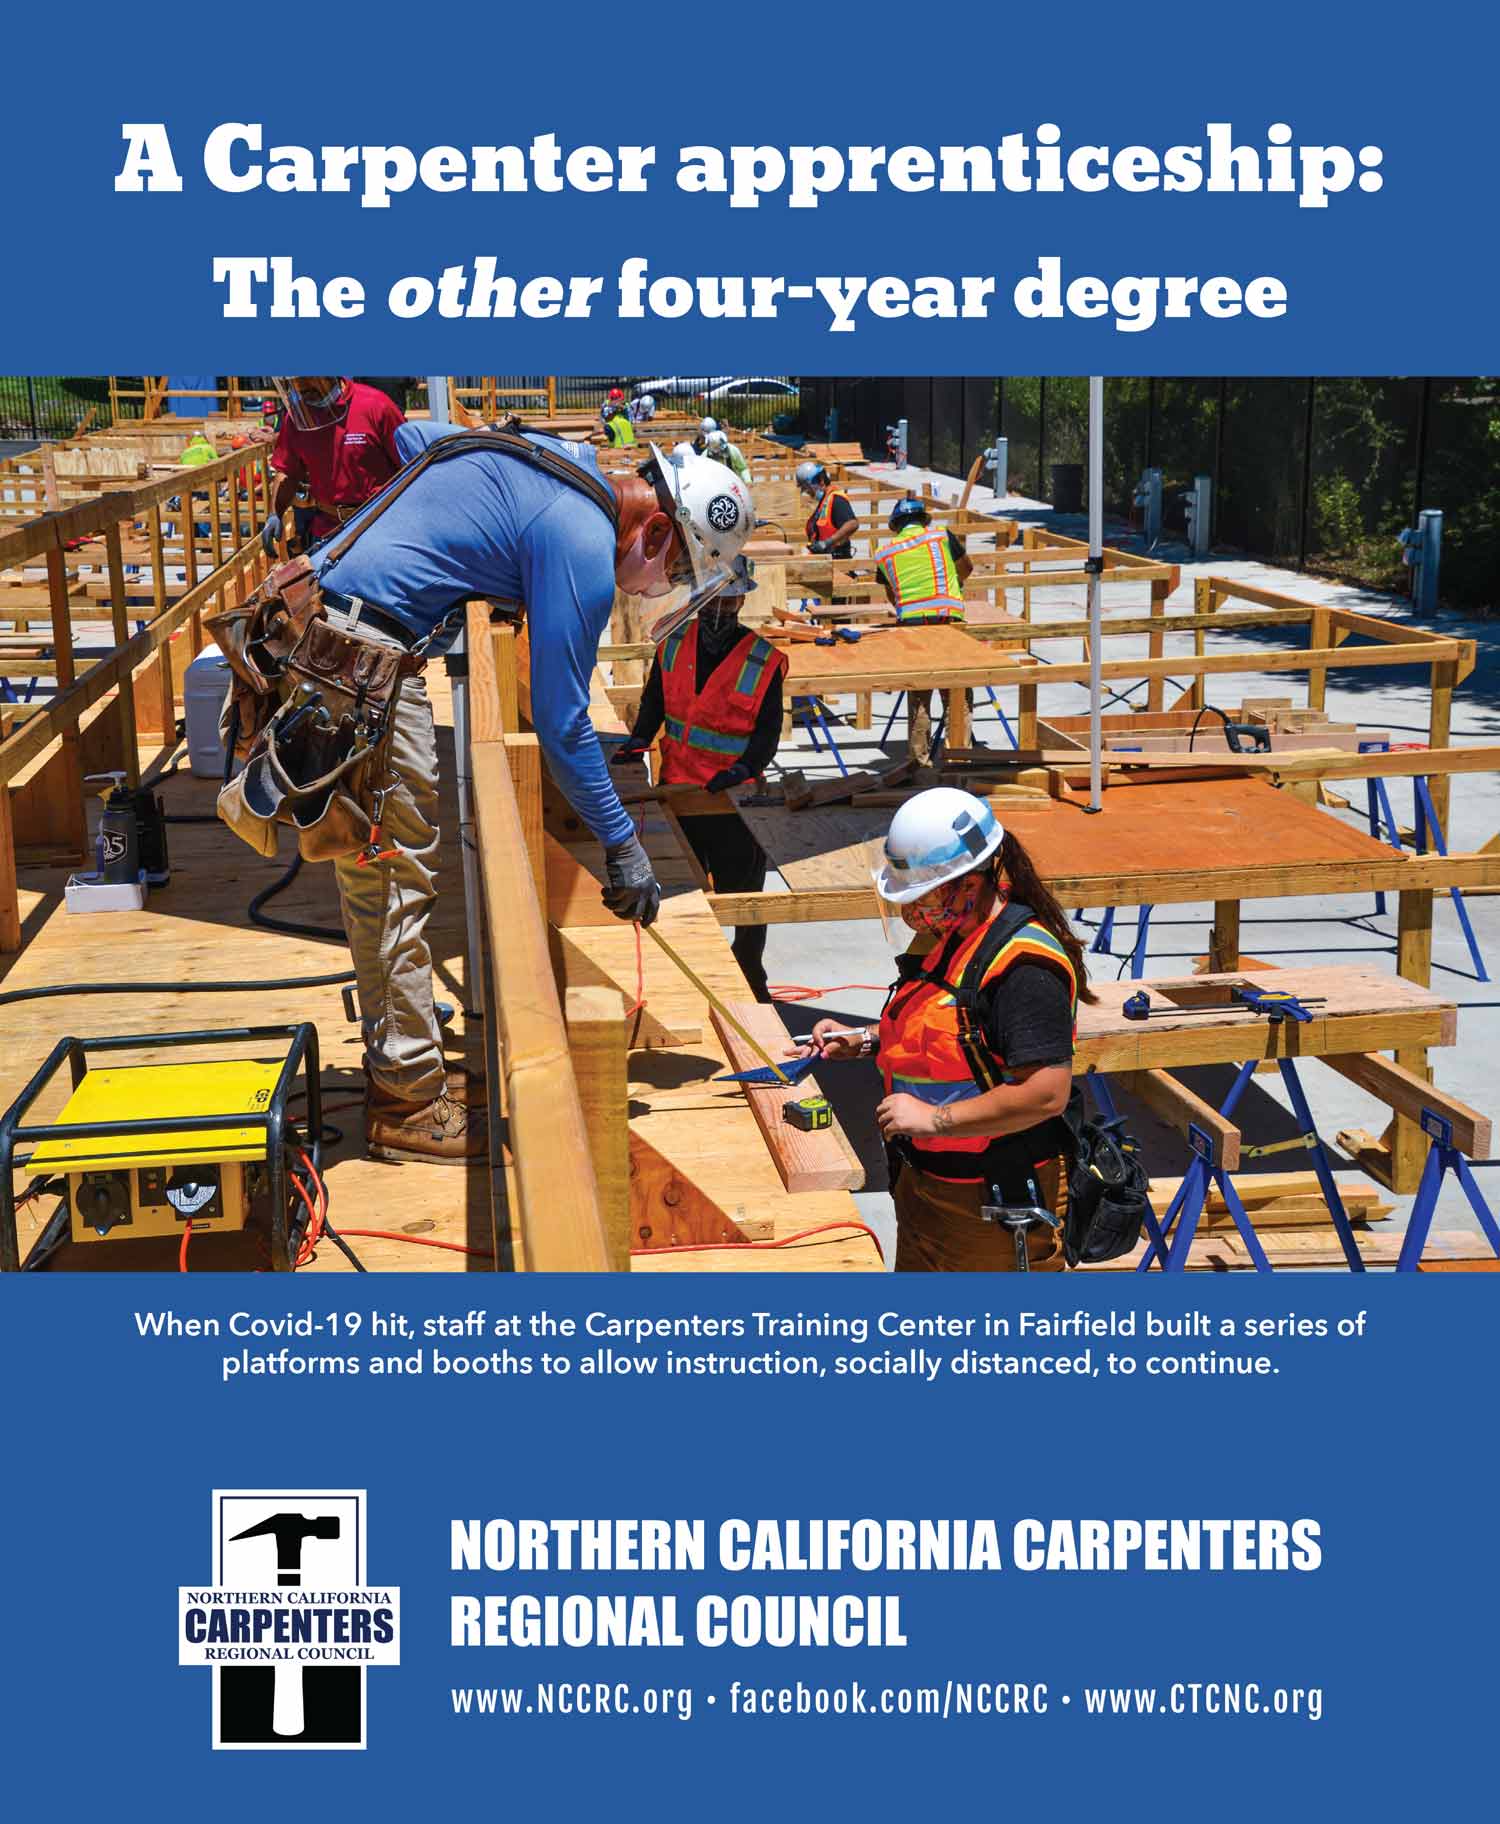 Northern California Carpenters Regional Council Advertisement